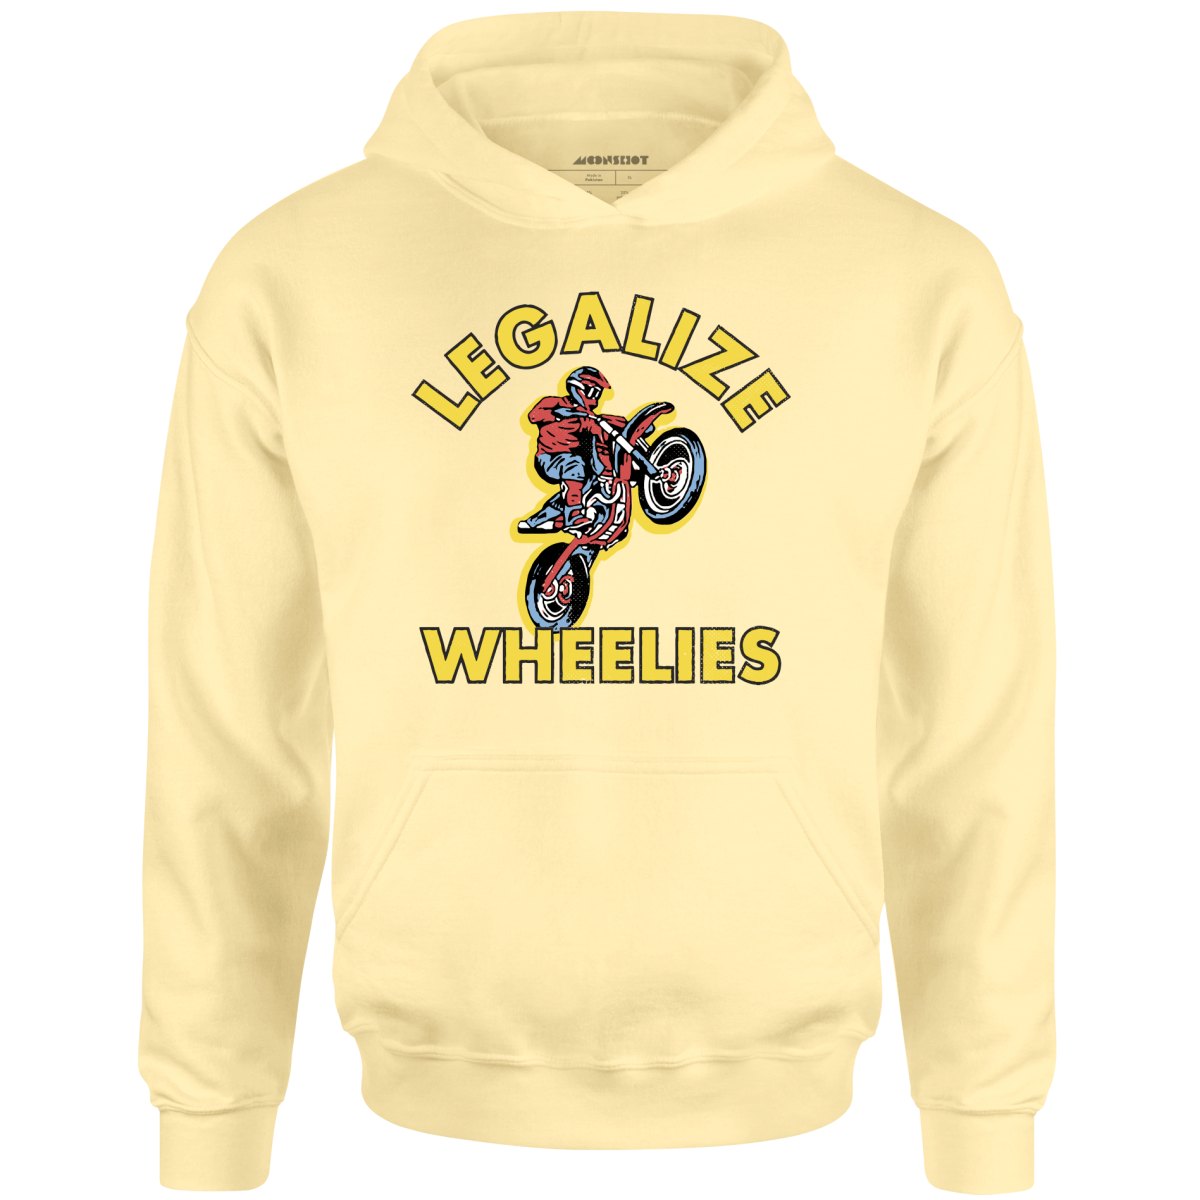 Legalize Wheelies - Unisex Hoodie